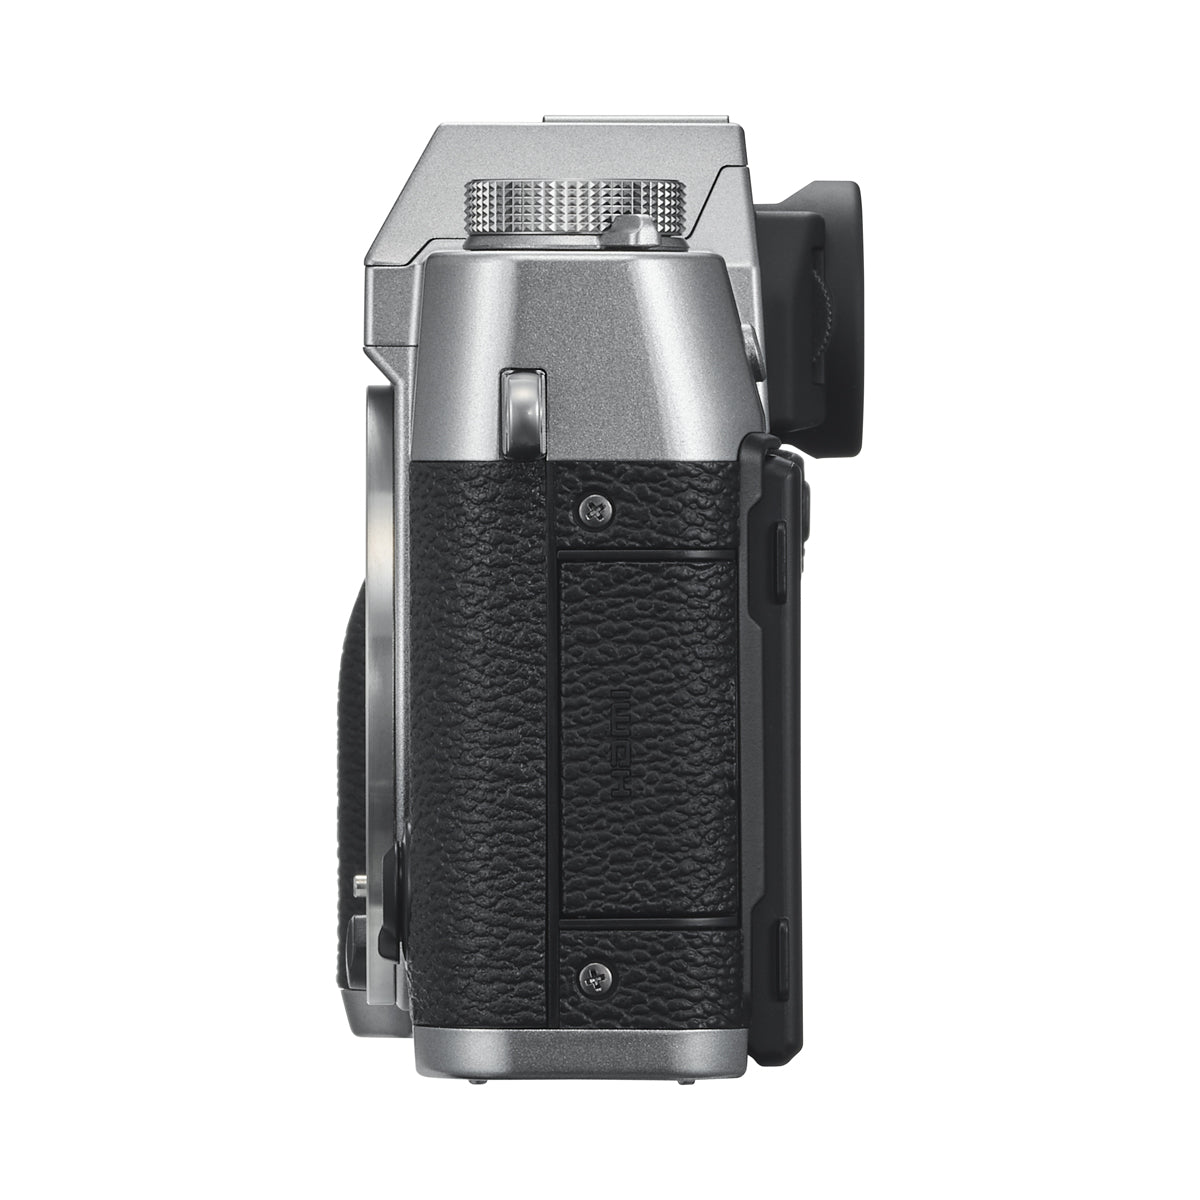 Fujifilm X-T30 Mirrorless Body with XF 18-55mm Lens Kit (Silver)